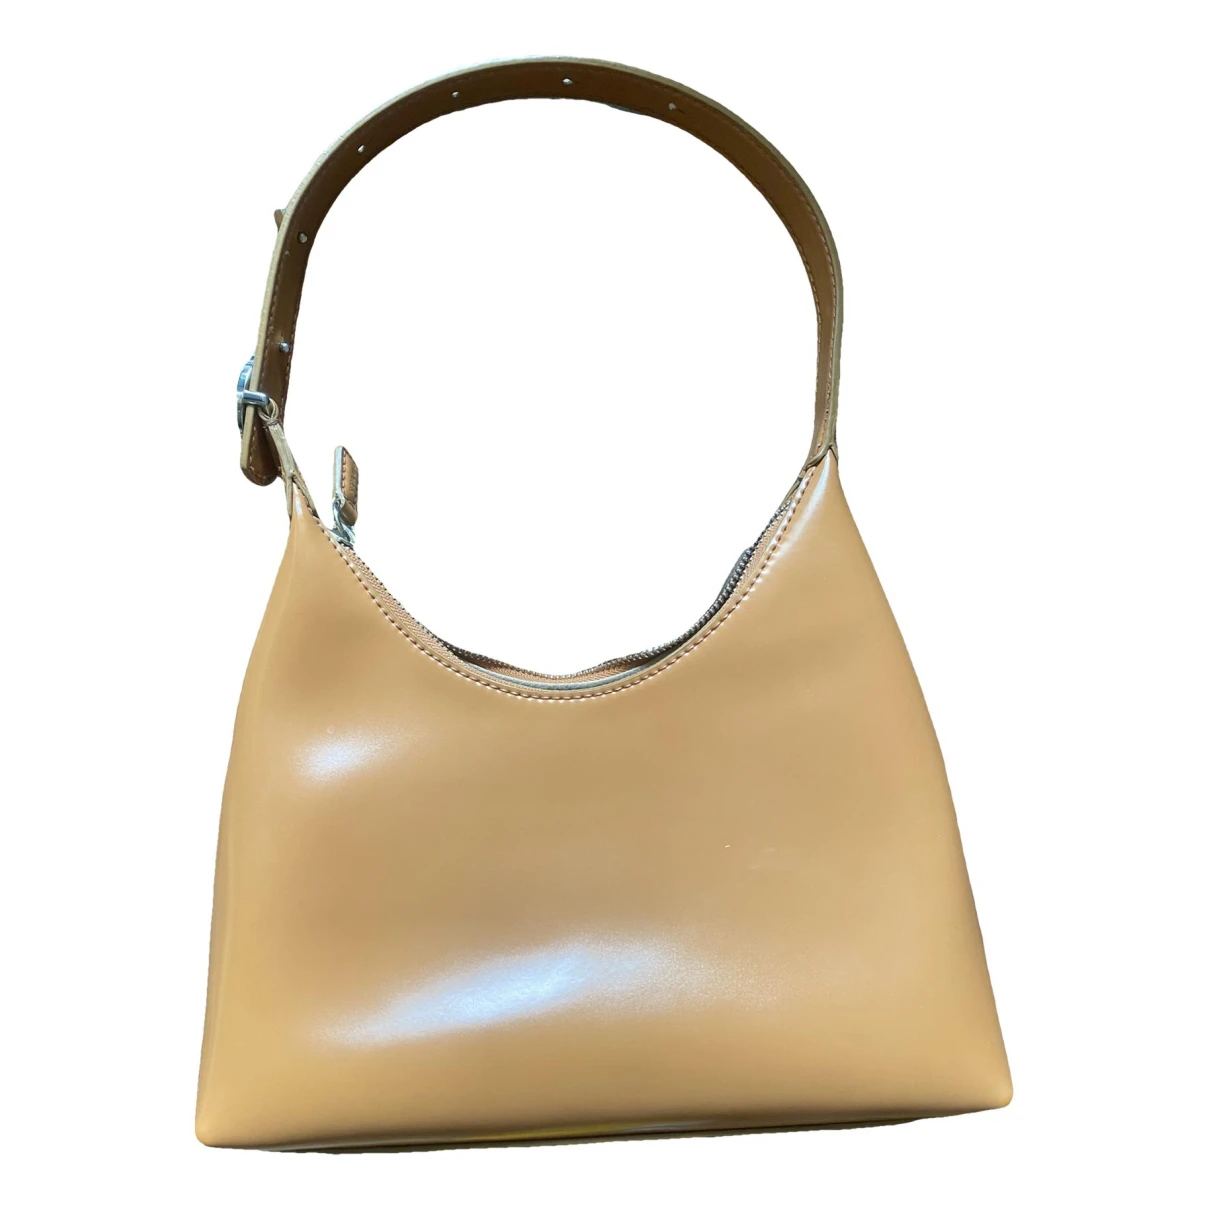 Pre-owned Staud Leather Handbag In Brown